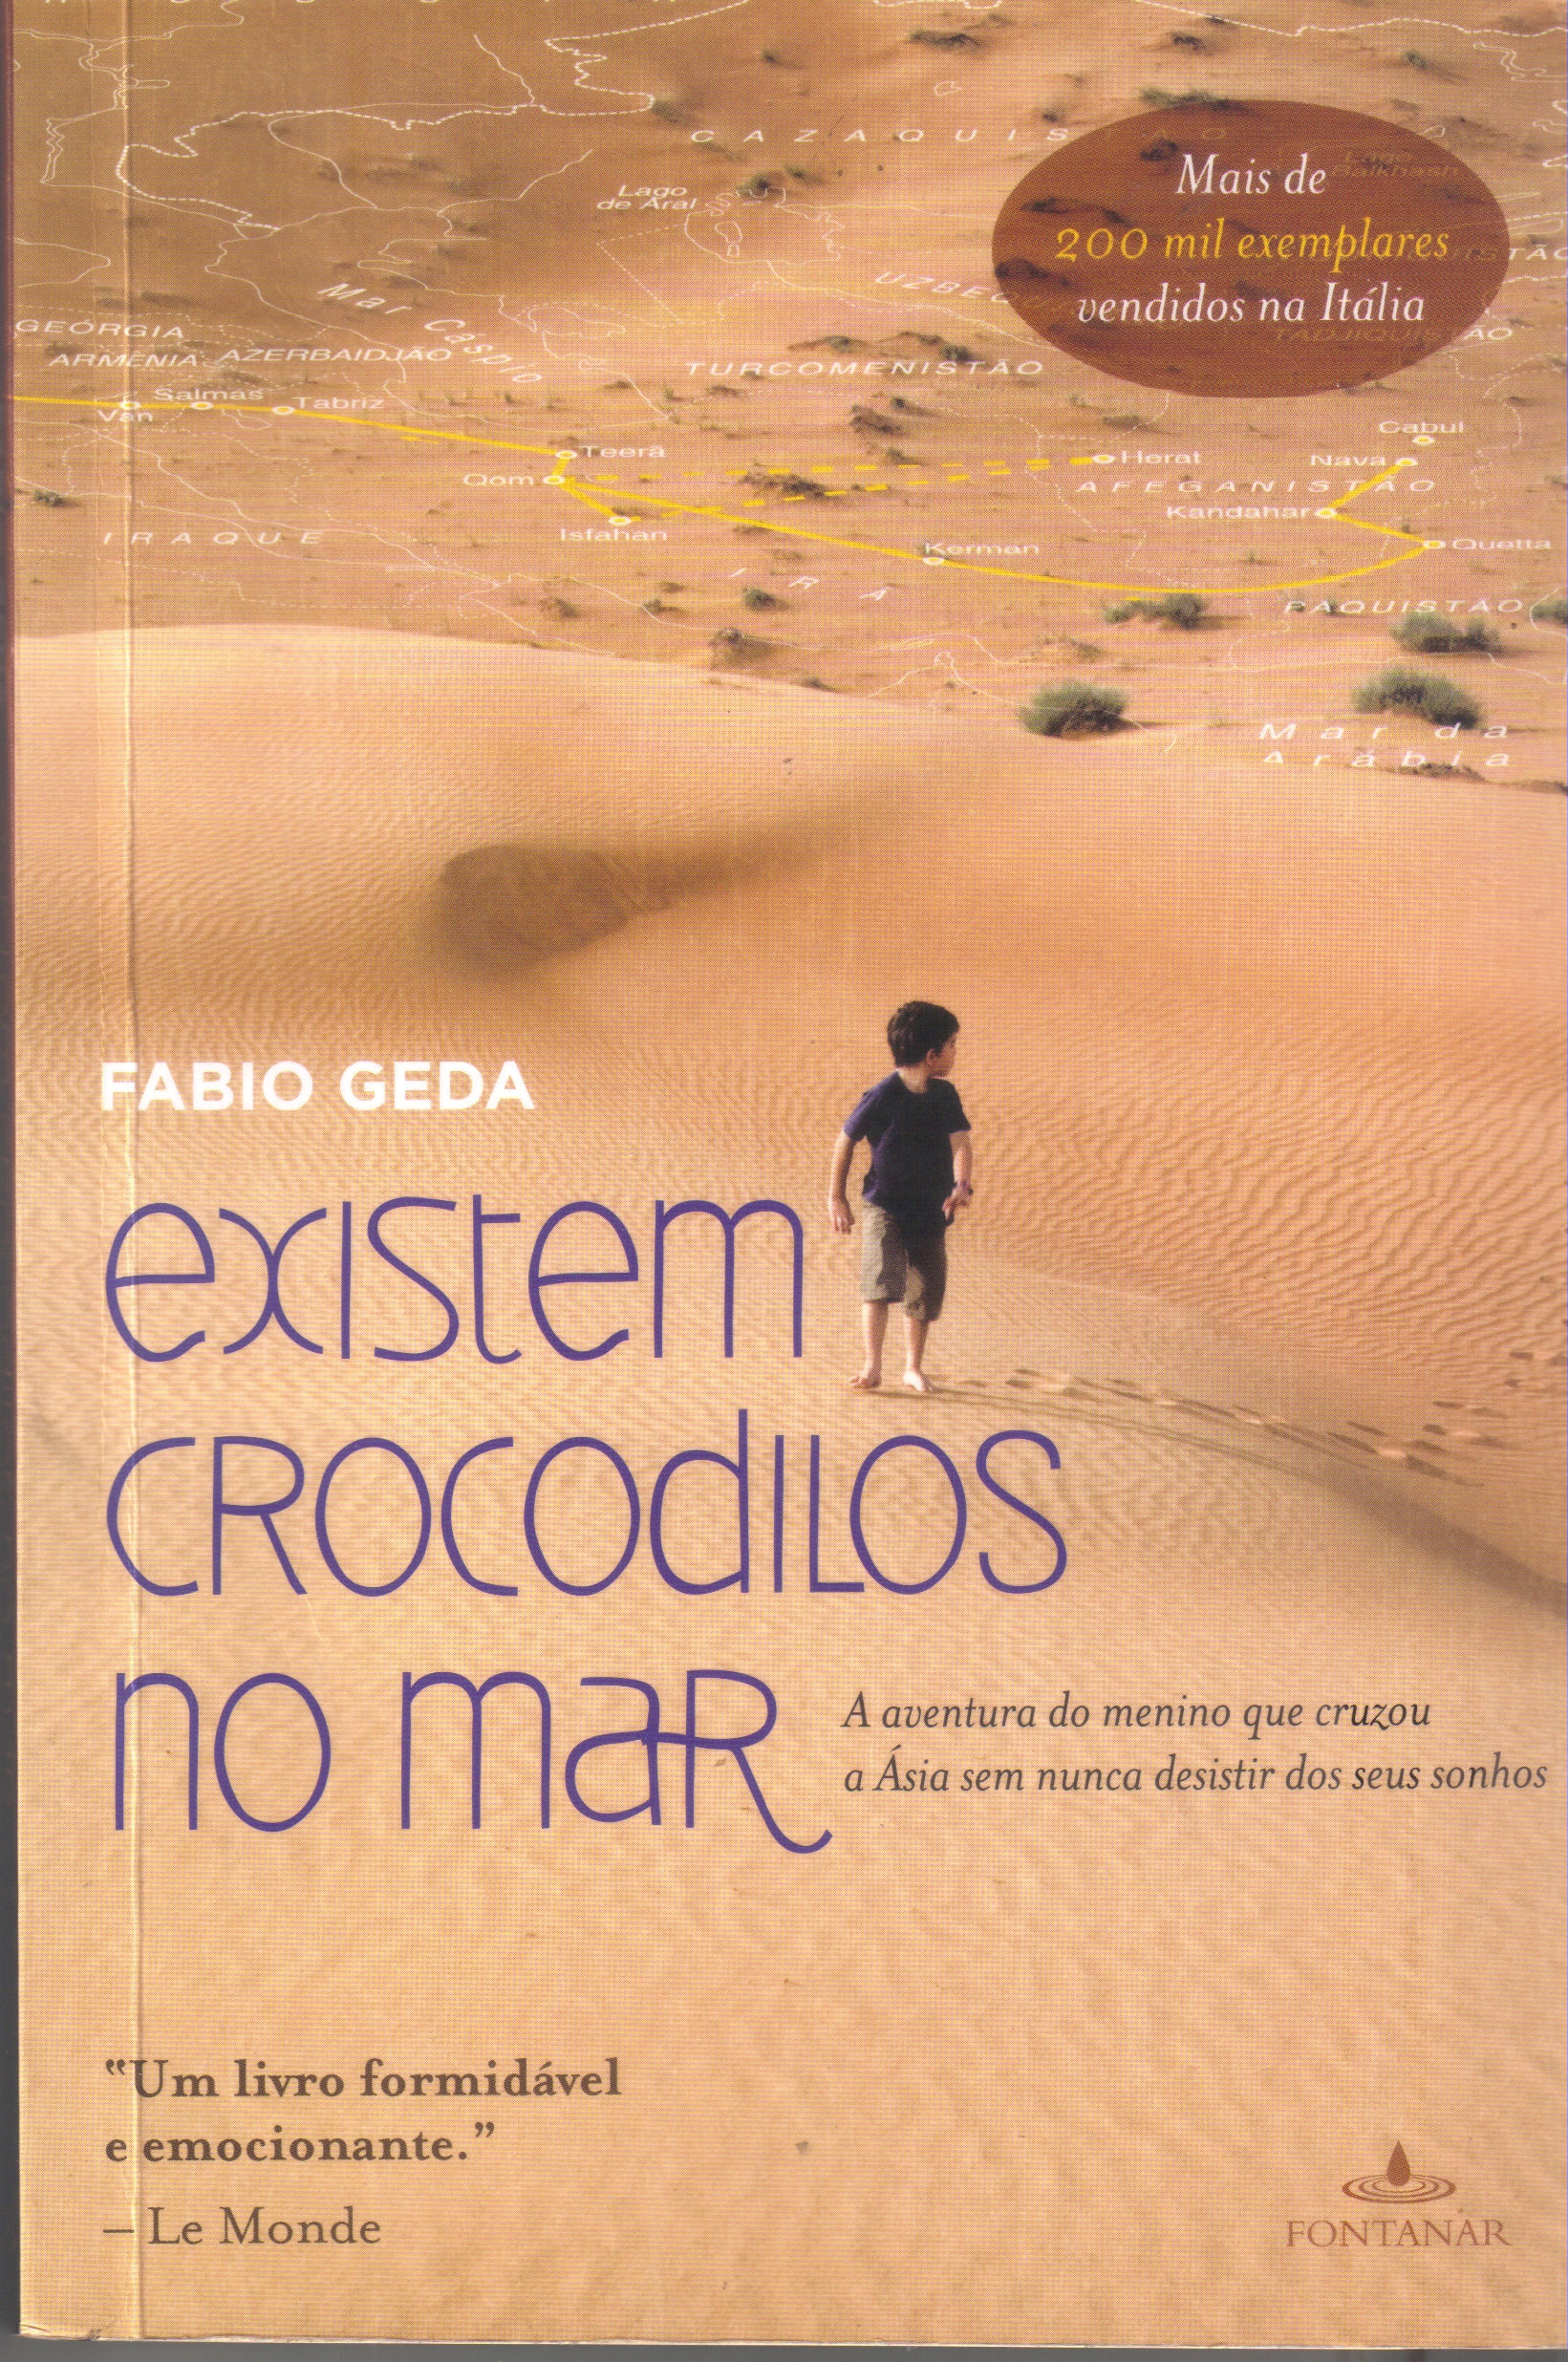 https://www.literaturabrasileira.ufsc.br/_images/obras/existem_crocodilos_no_mar_-_fabio_geda.jpg